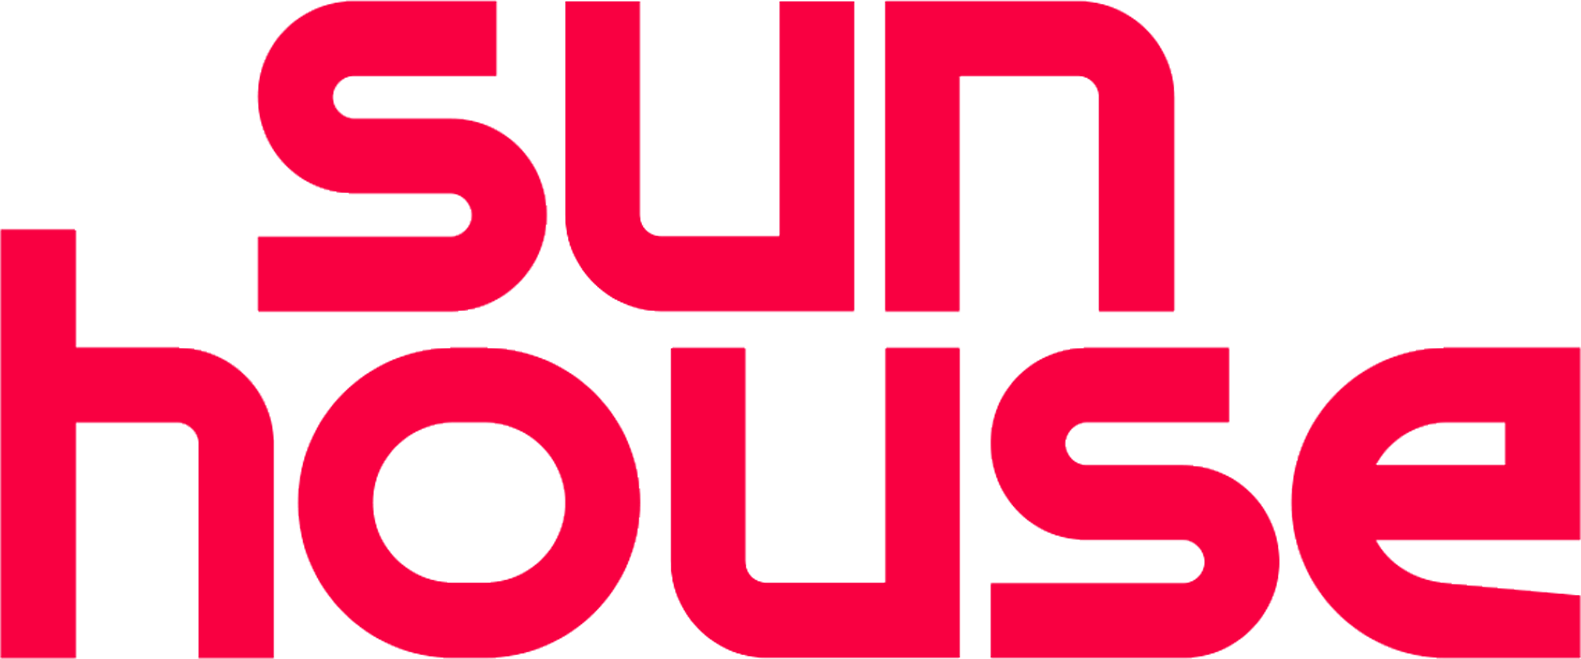 Sun House logo